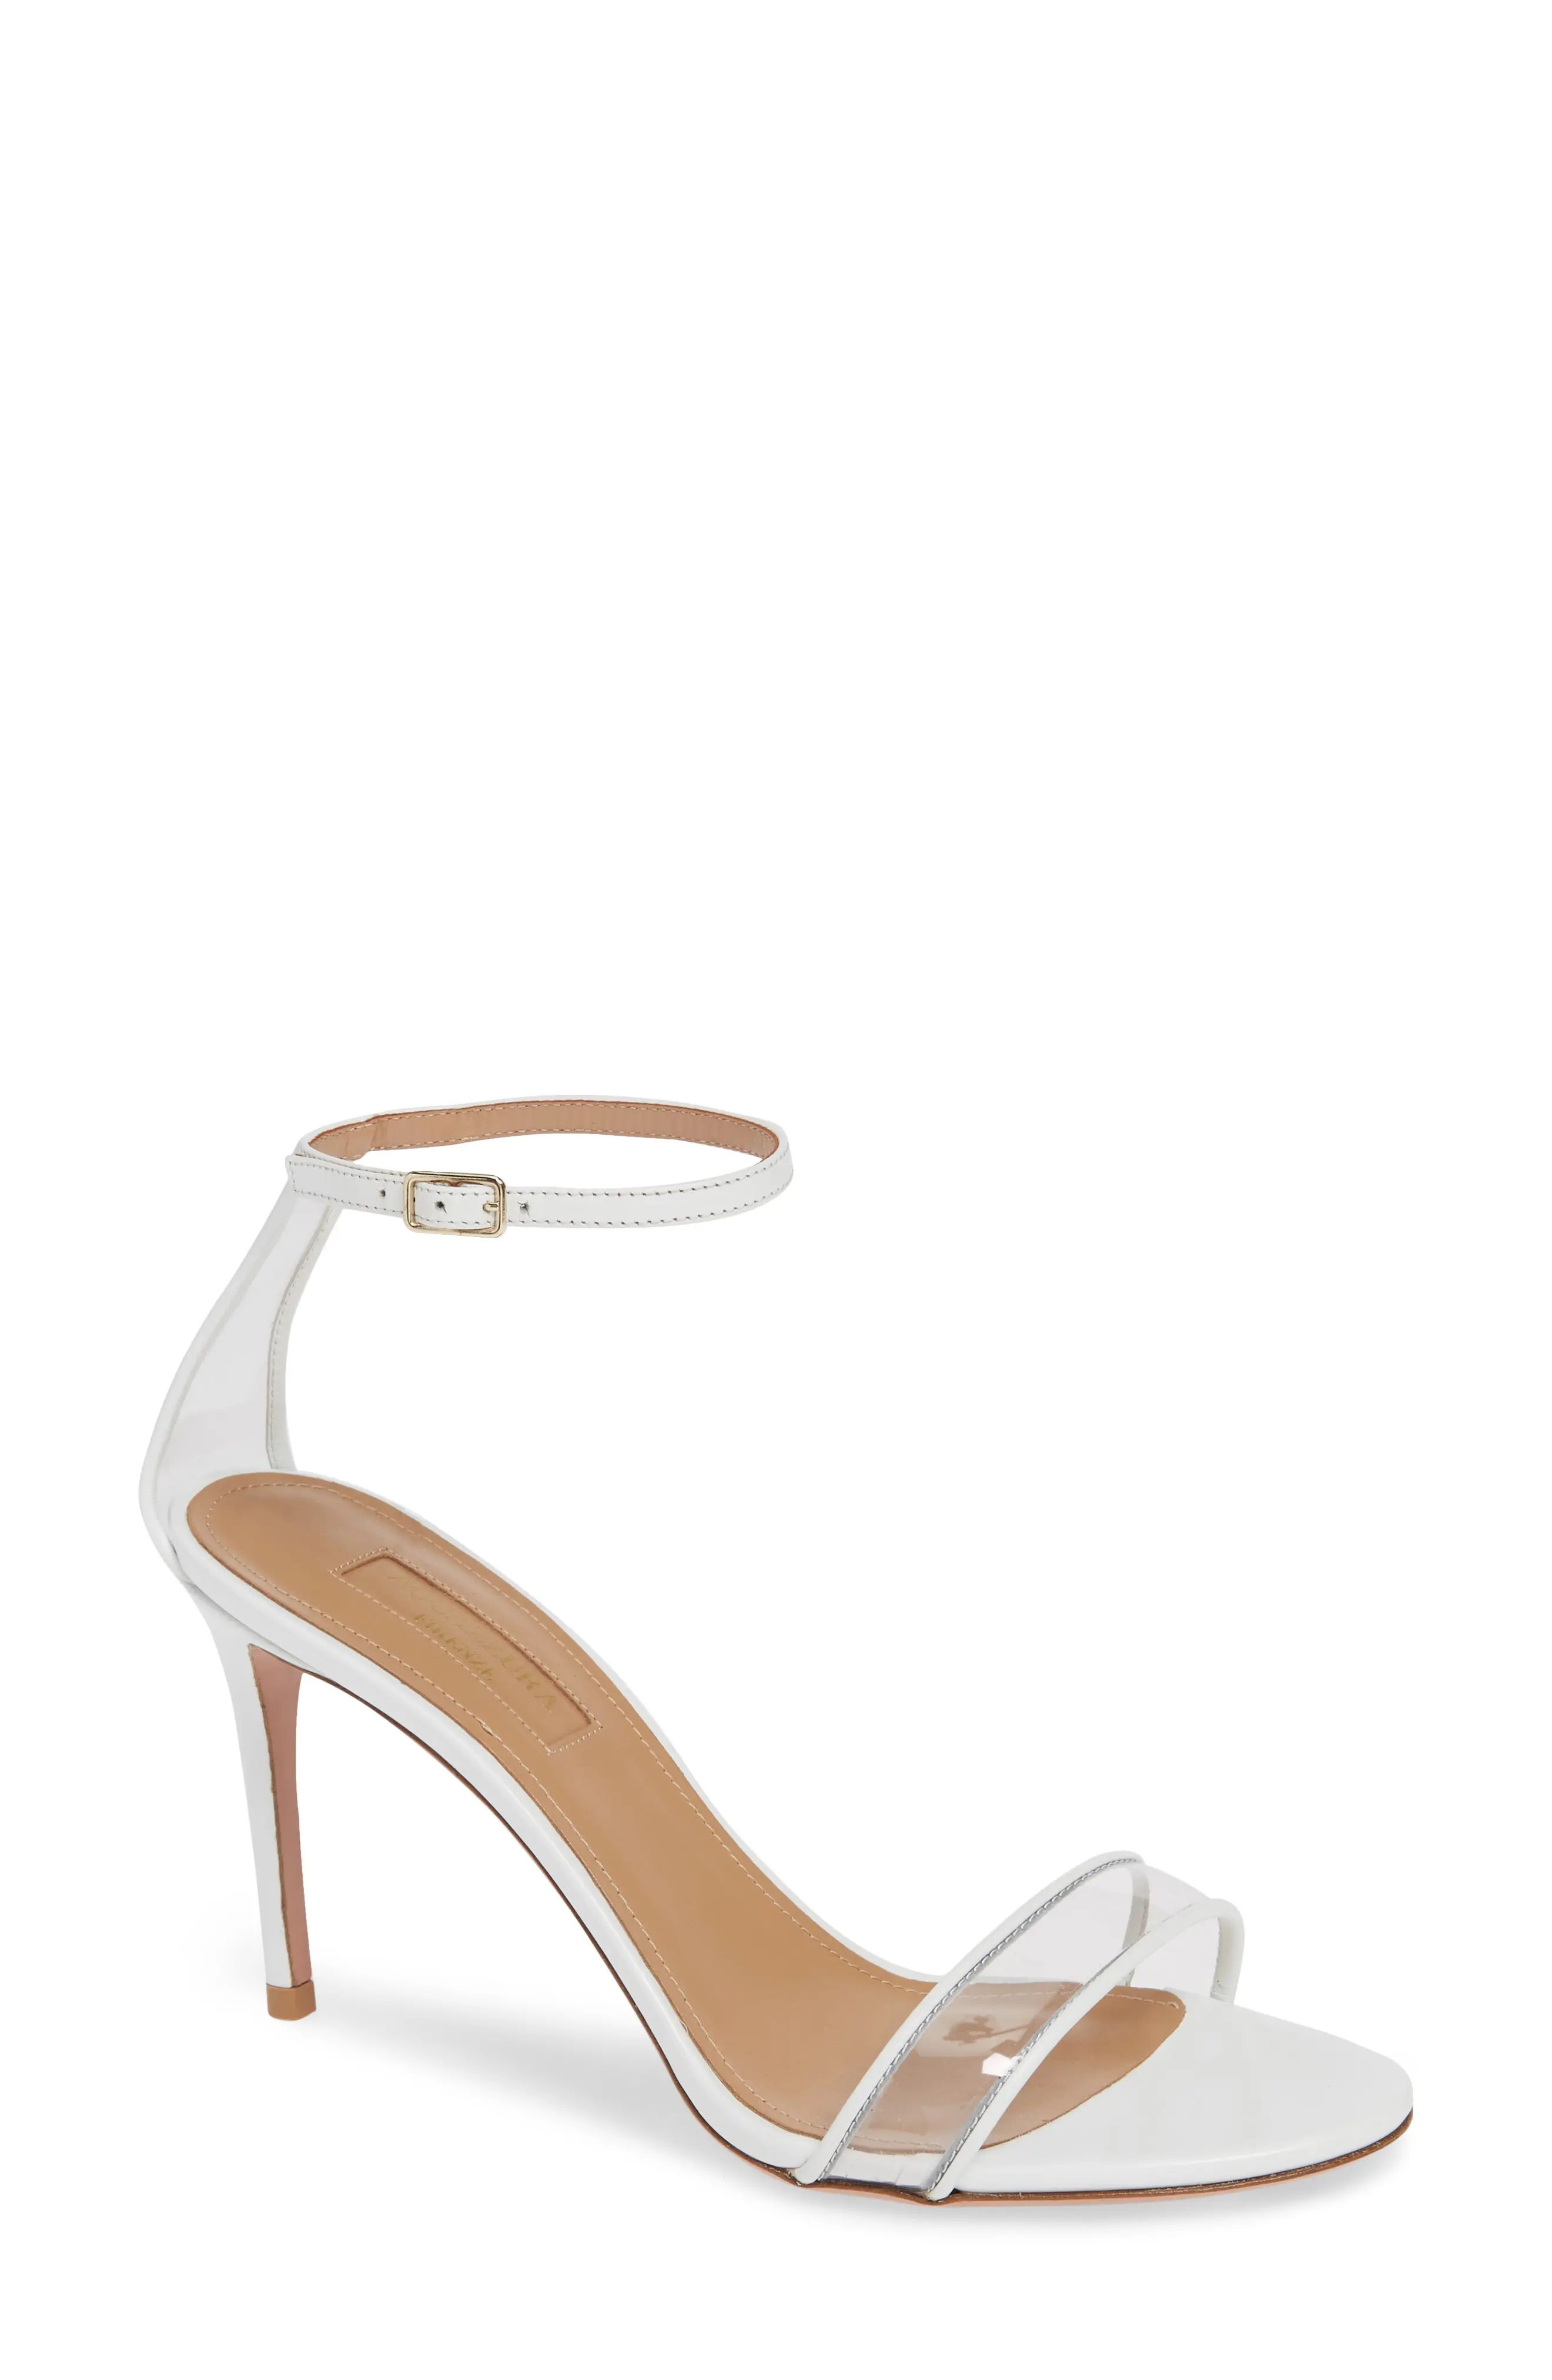 Women's Aquazzura Minimalist Clear Sandal, Size 5US / 35EU - White | Nordstrom